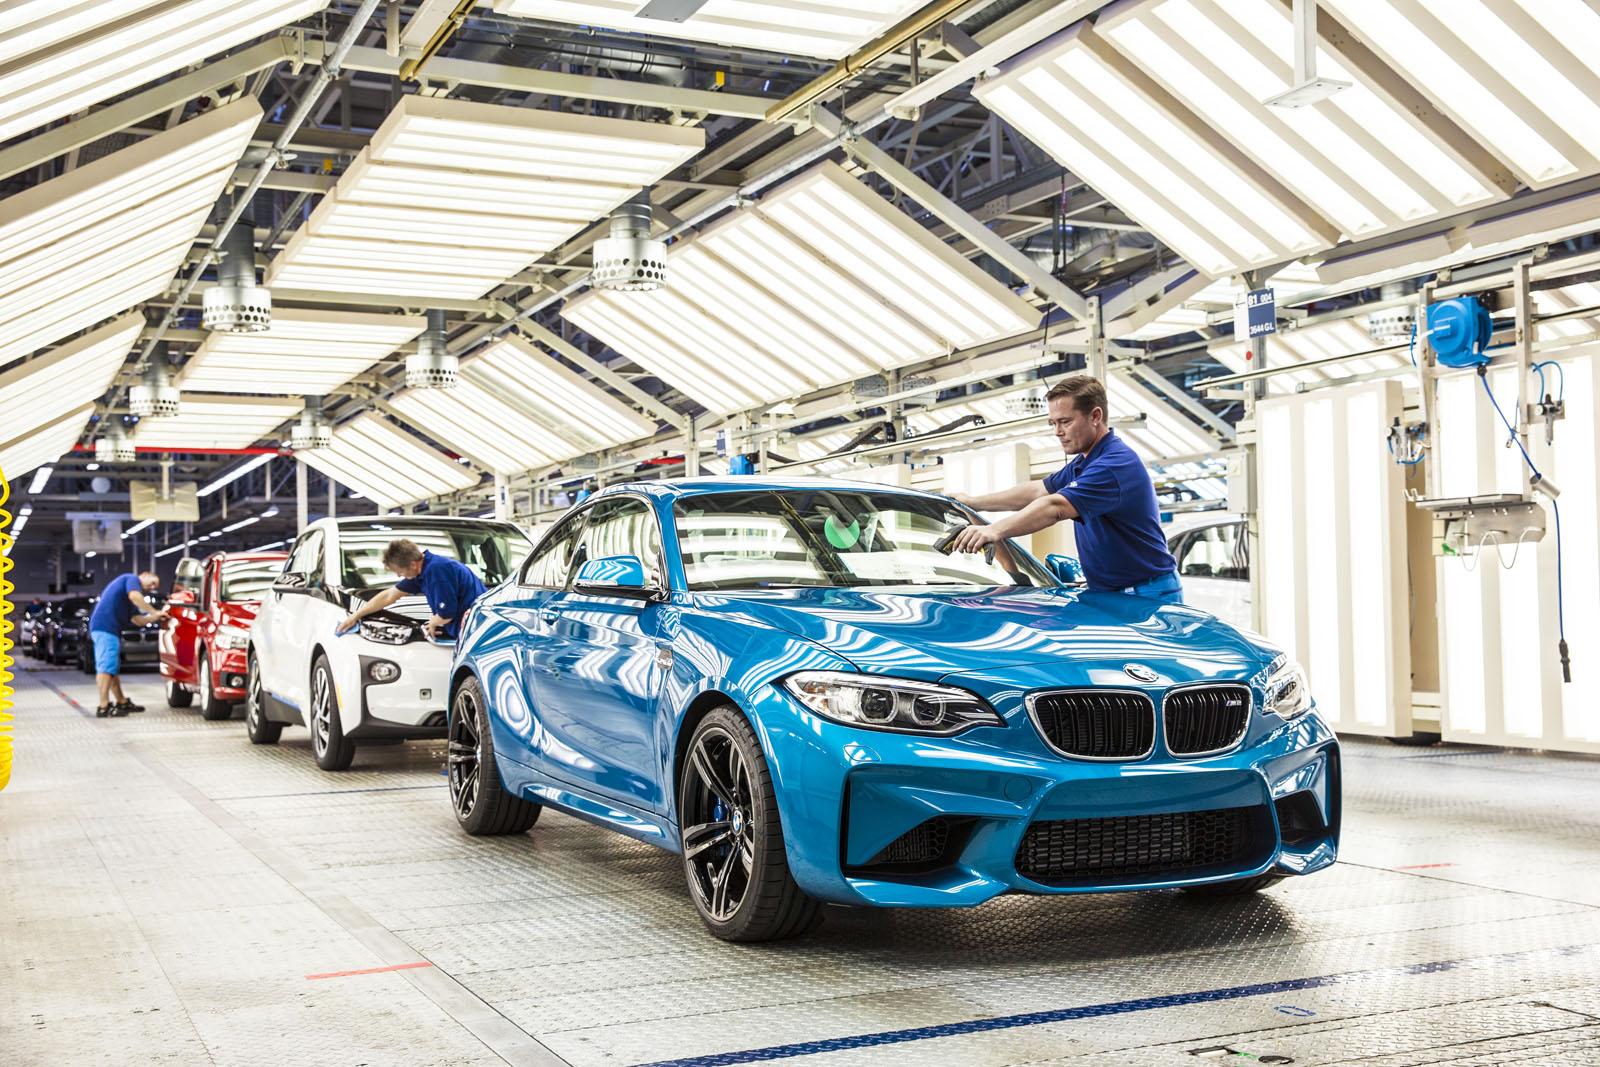 BMW M2 production factory